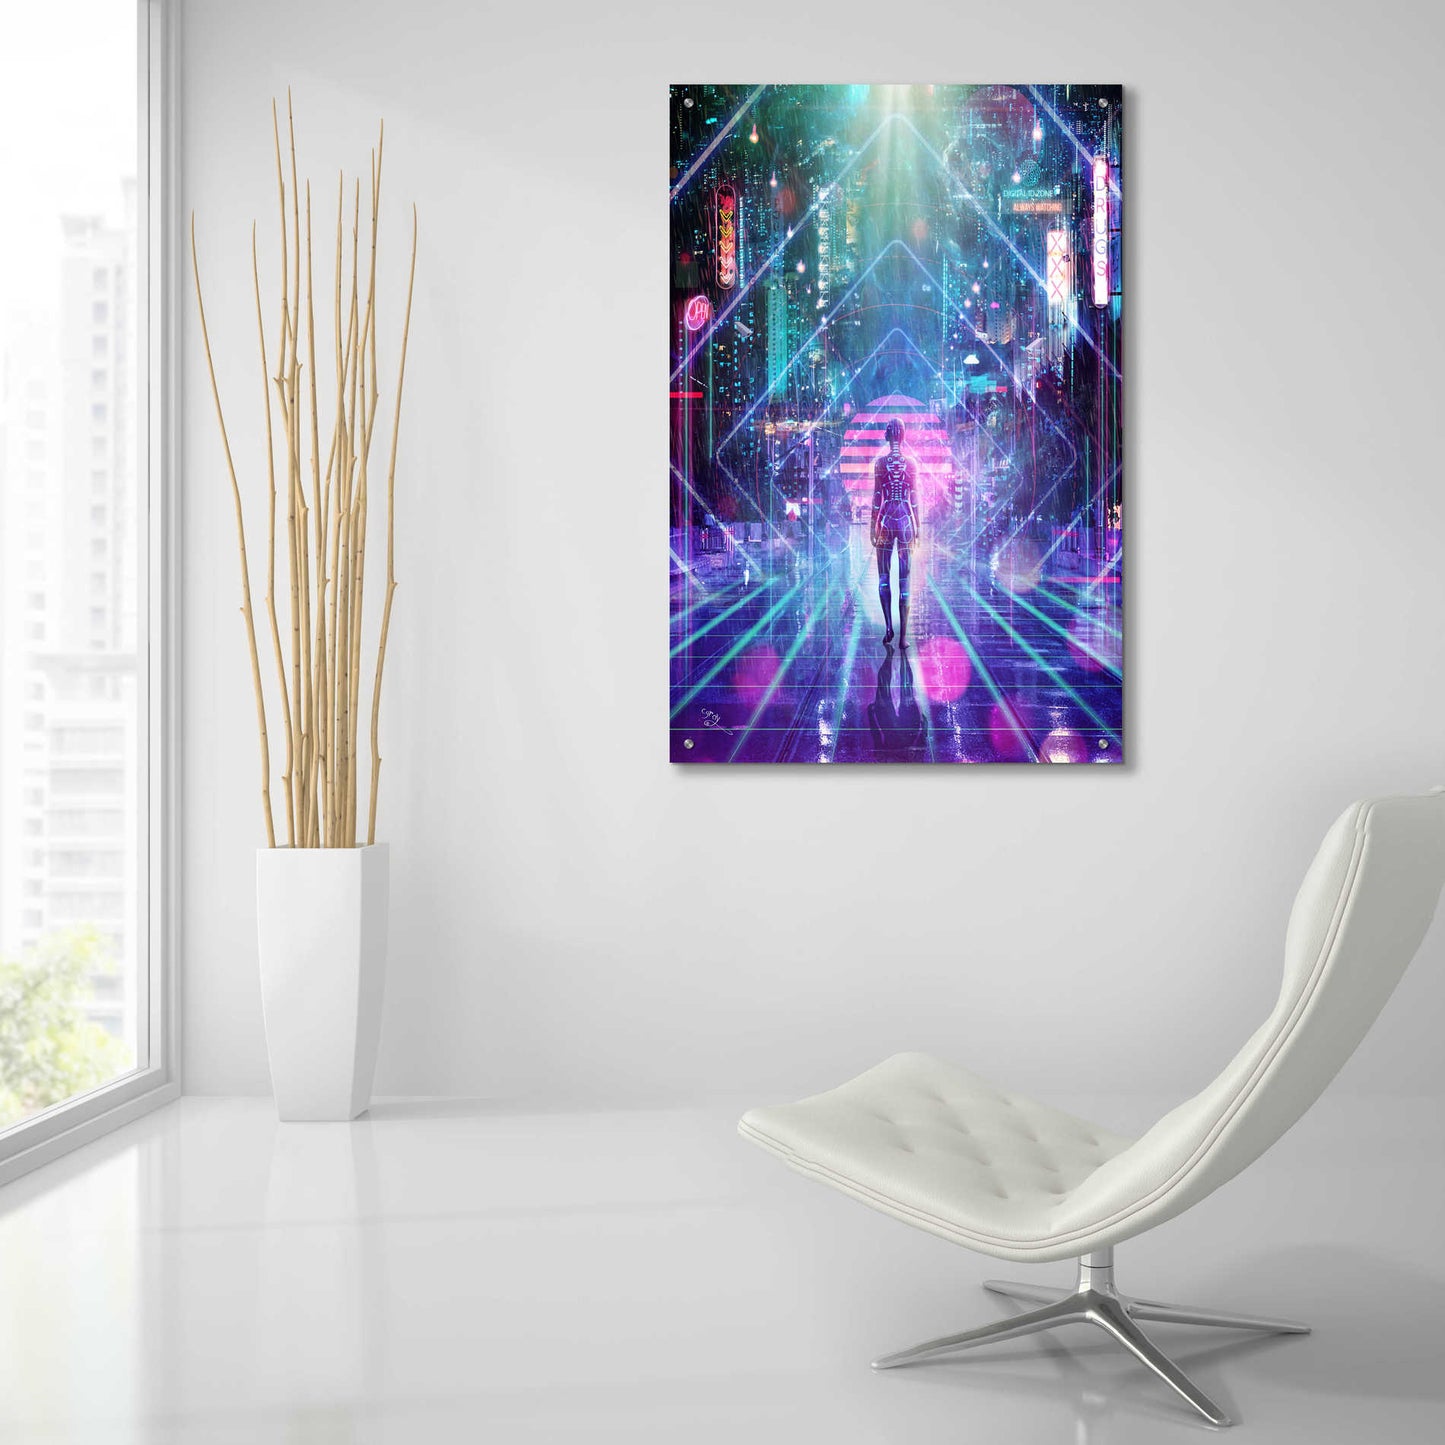 Epic Art 'Neon Zone' by Cameron Gray Acrylic Glass Wall Art,24x36